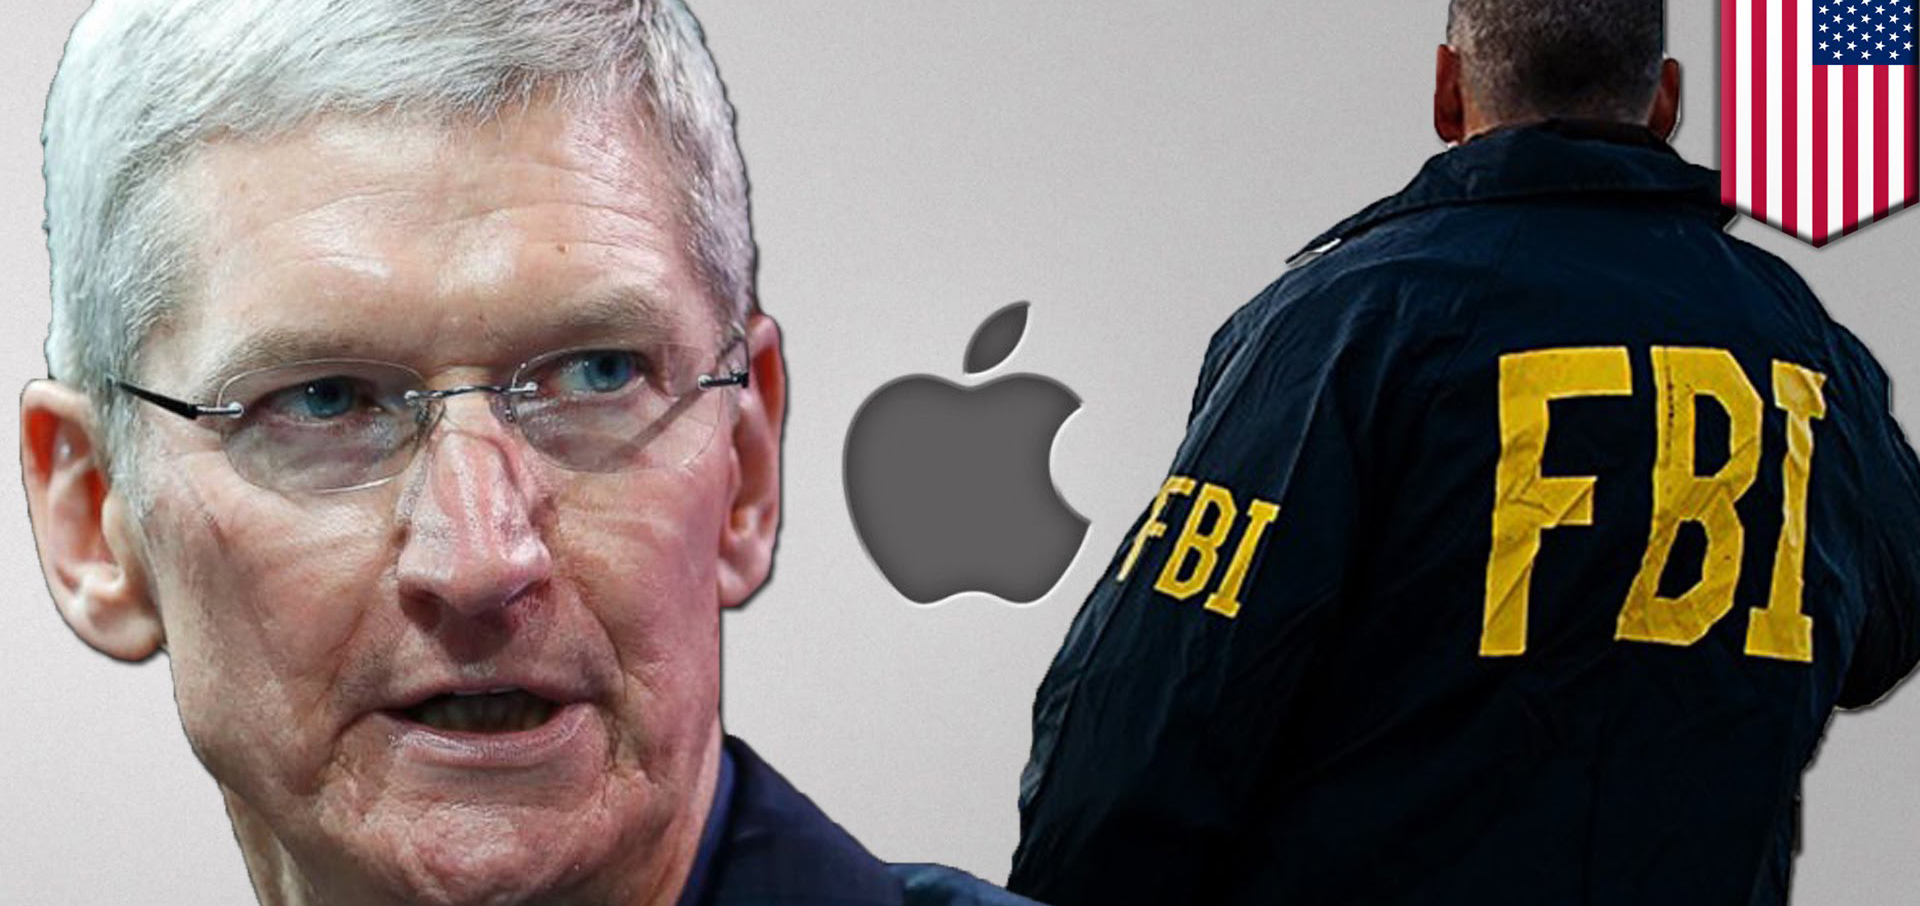 Apple Vs FBI – Should They Unlock The Phone?